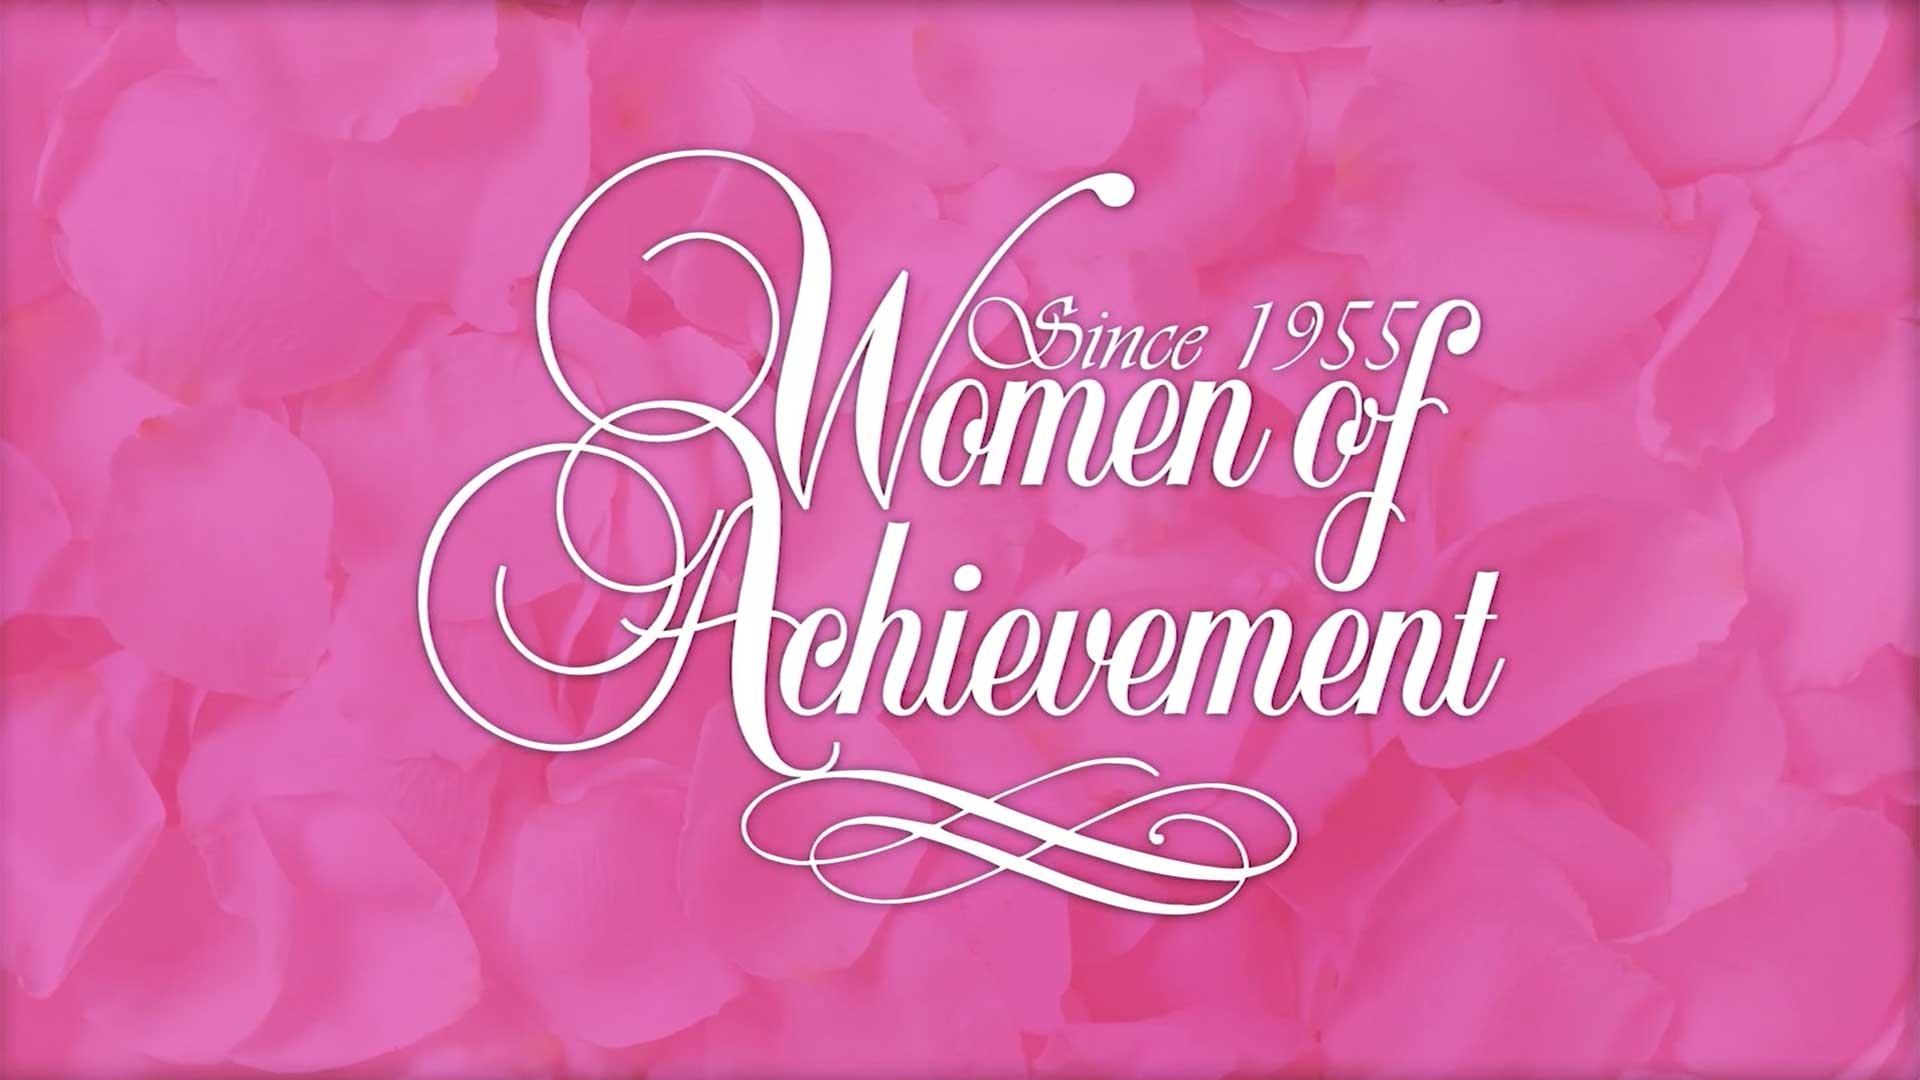 67th Women of Achievement Awards Celebration